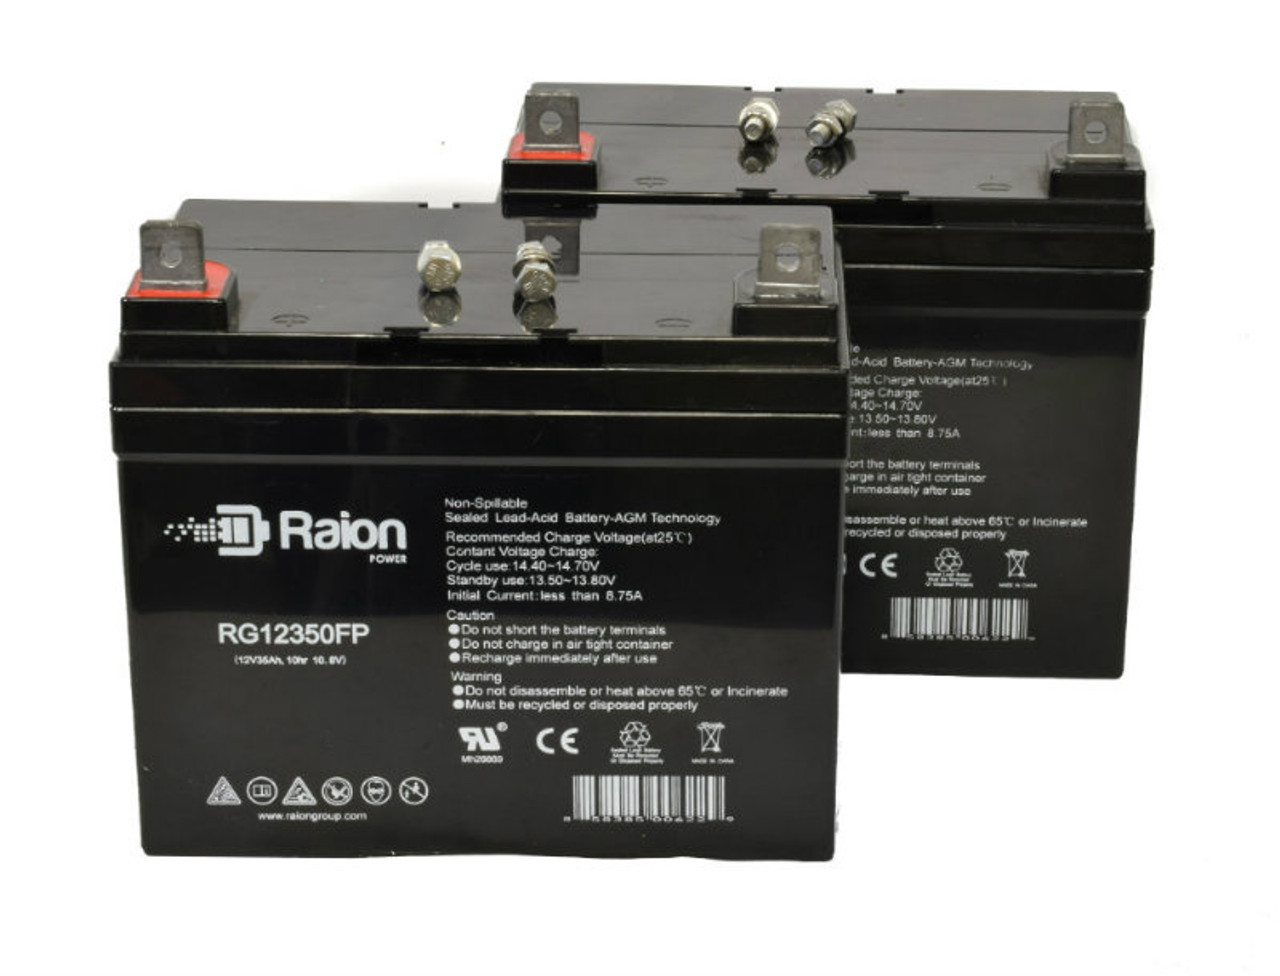 Raion Power Replacement 12V 35Ah Lawn Mower Battery for Zipper TS-950-D - 2 Pack